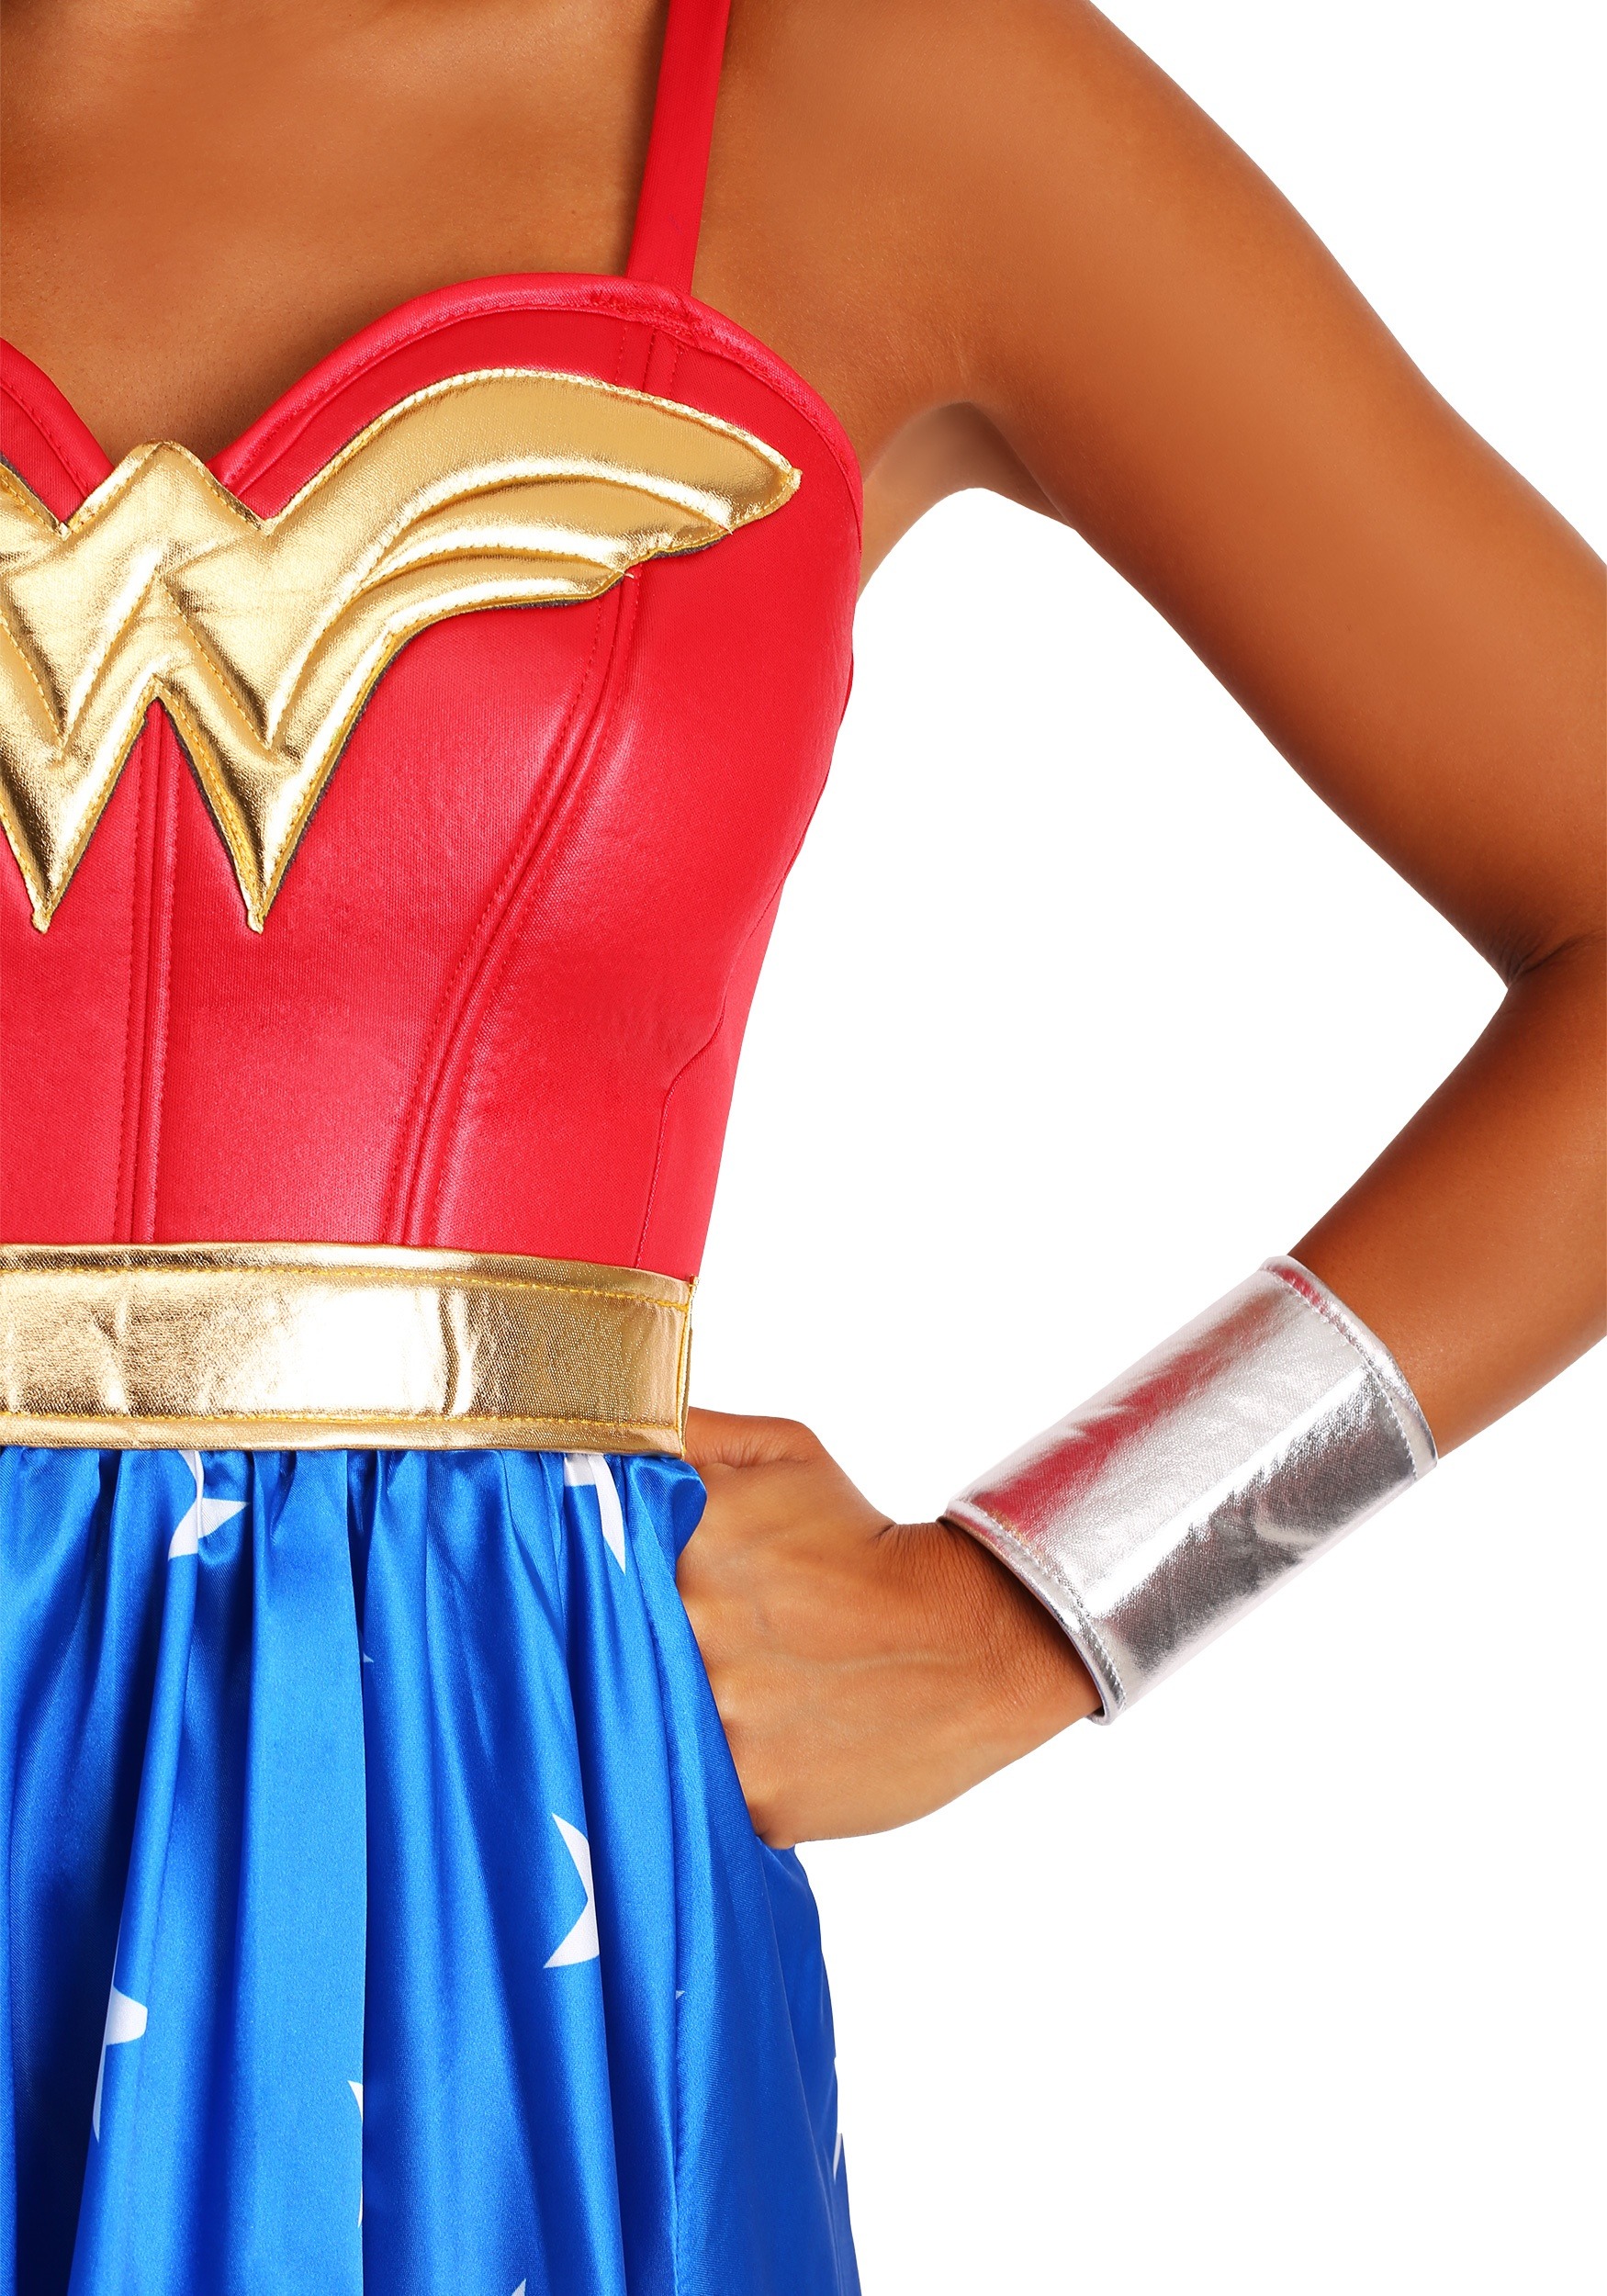 Wonder Woman costume set - M/L, Women's Fashion, Clothes on Carousell